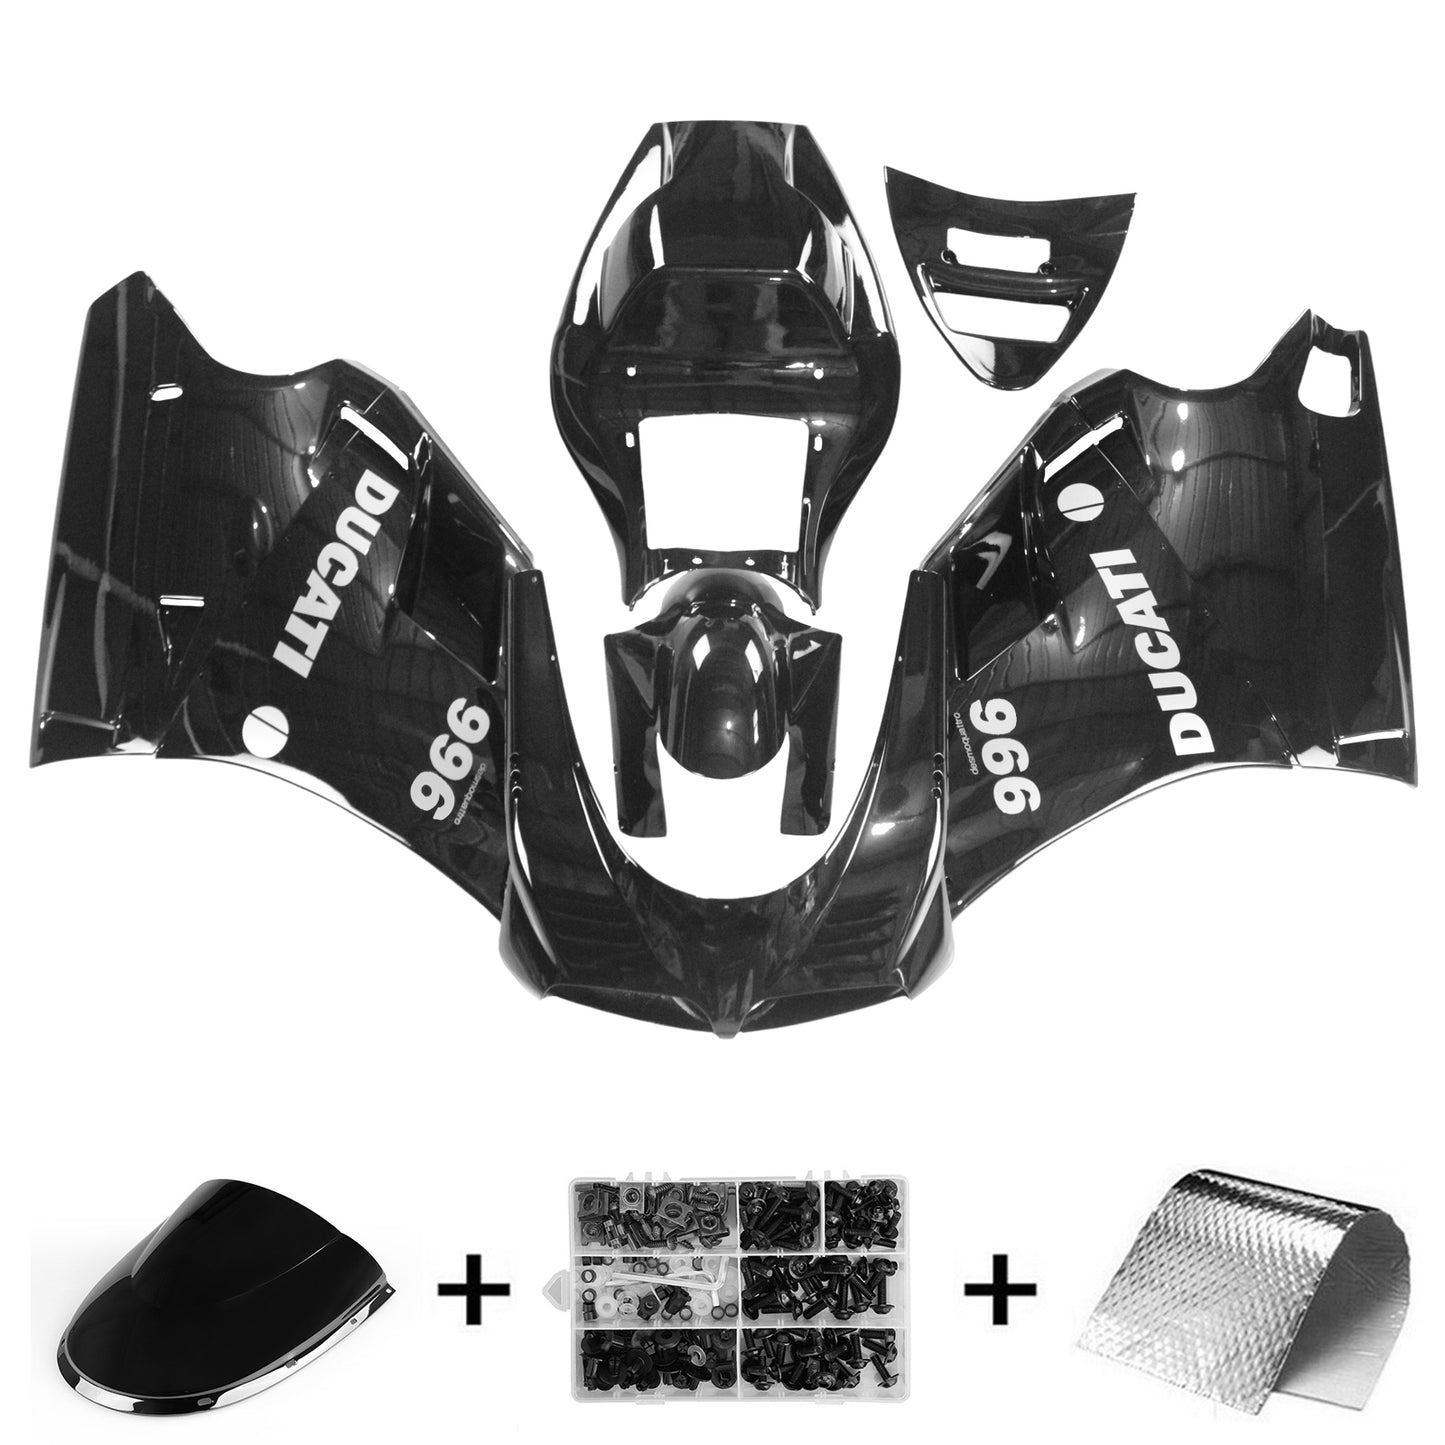 1996-2002 Ducati 996 748 Amotopart Fairing Kit Bodywork ABS #106